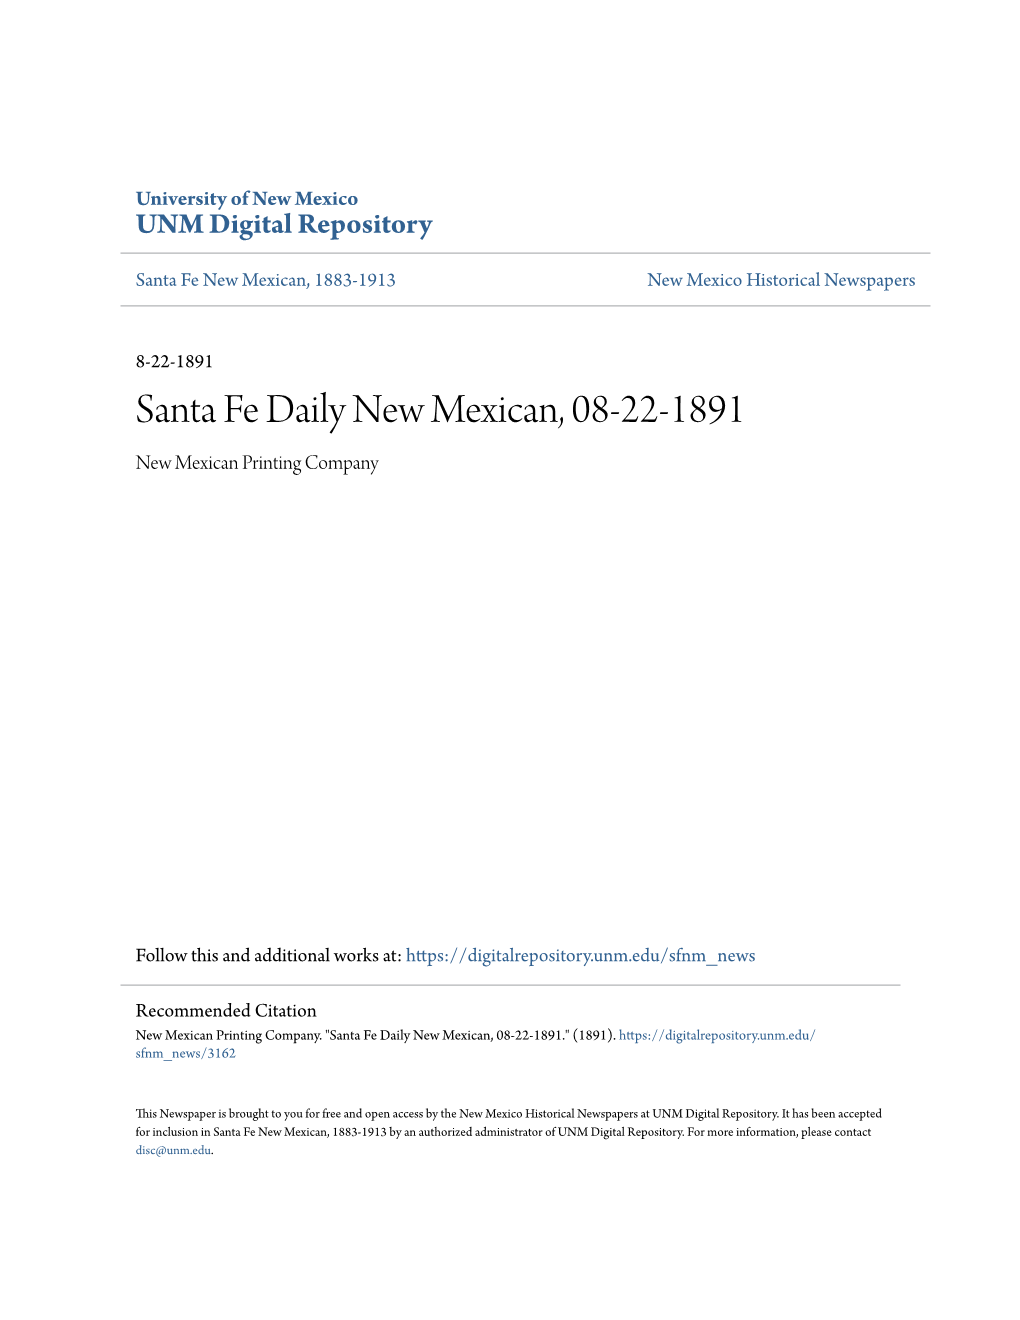 Santa Fe Daily New Mexican, 08-22-1891 New Mexican Printing Company